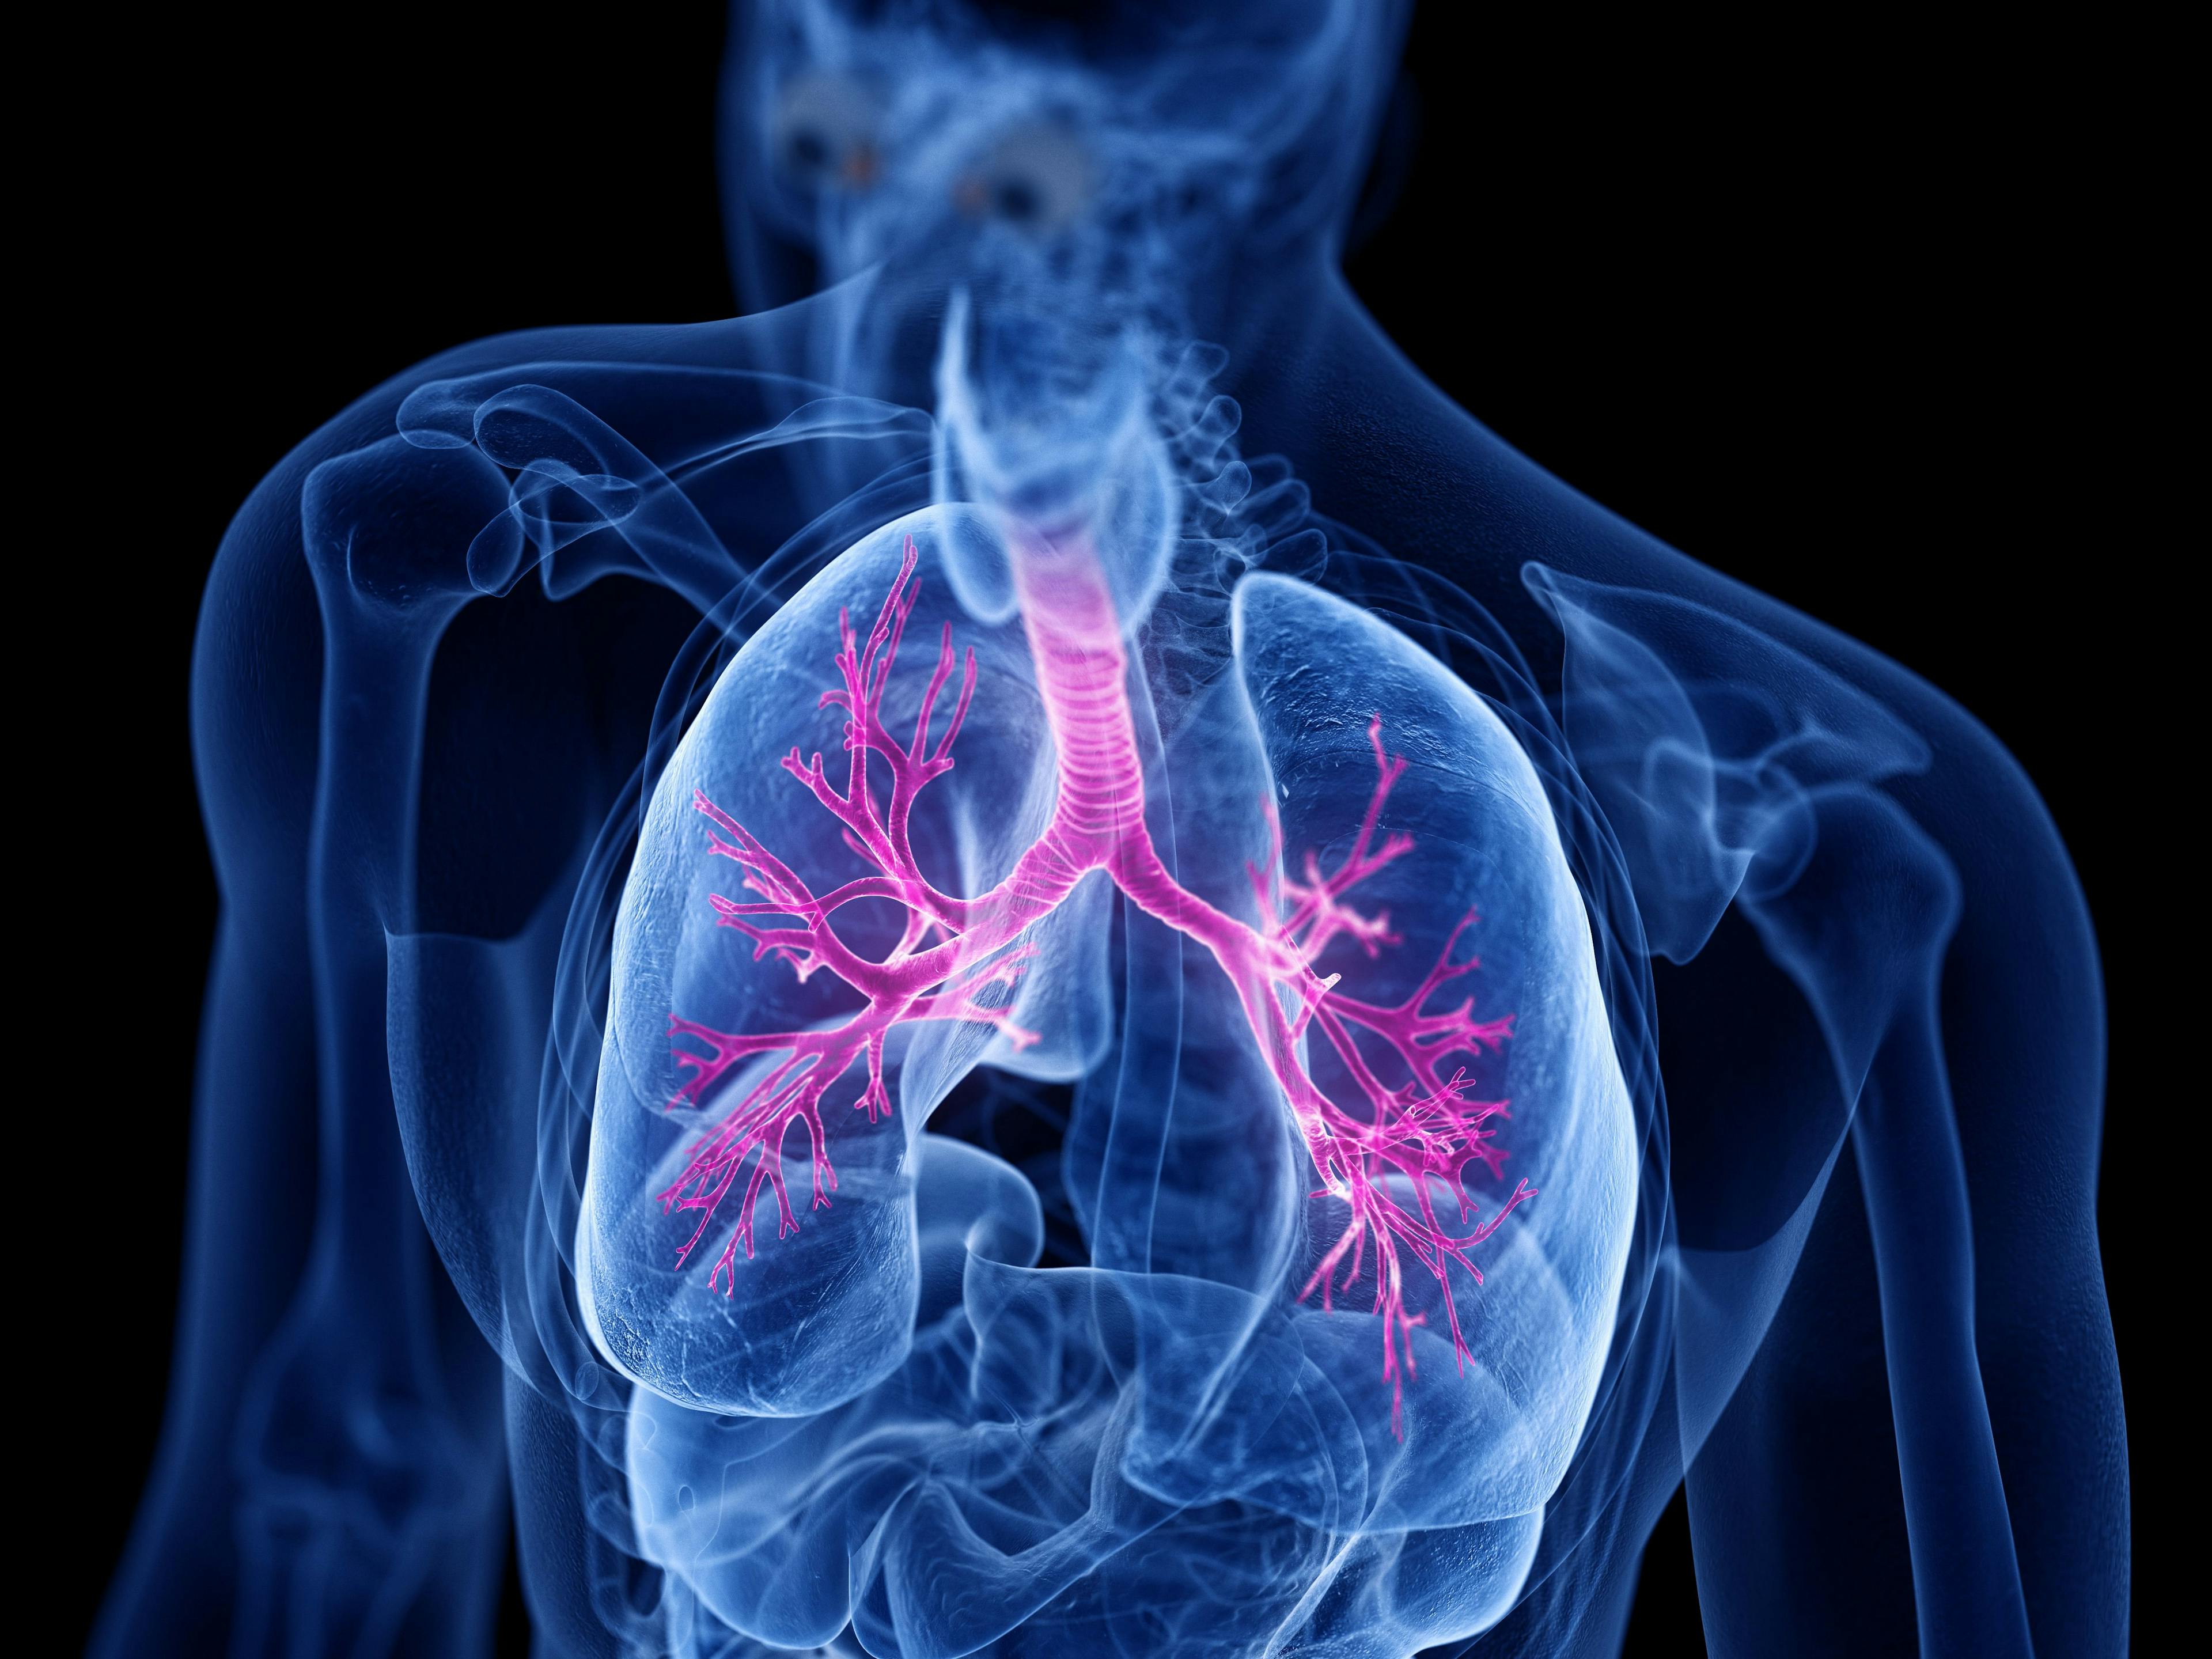 3d rendered medically accurate illustration of the bronchi | Image Credit: Sebastian Kaulitzki - stock.adobe.com